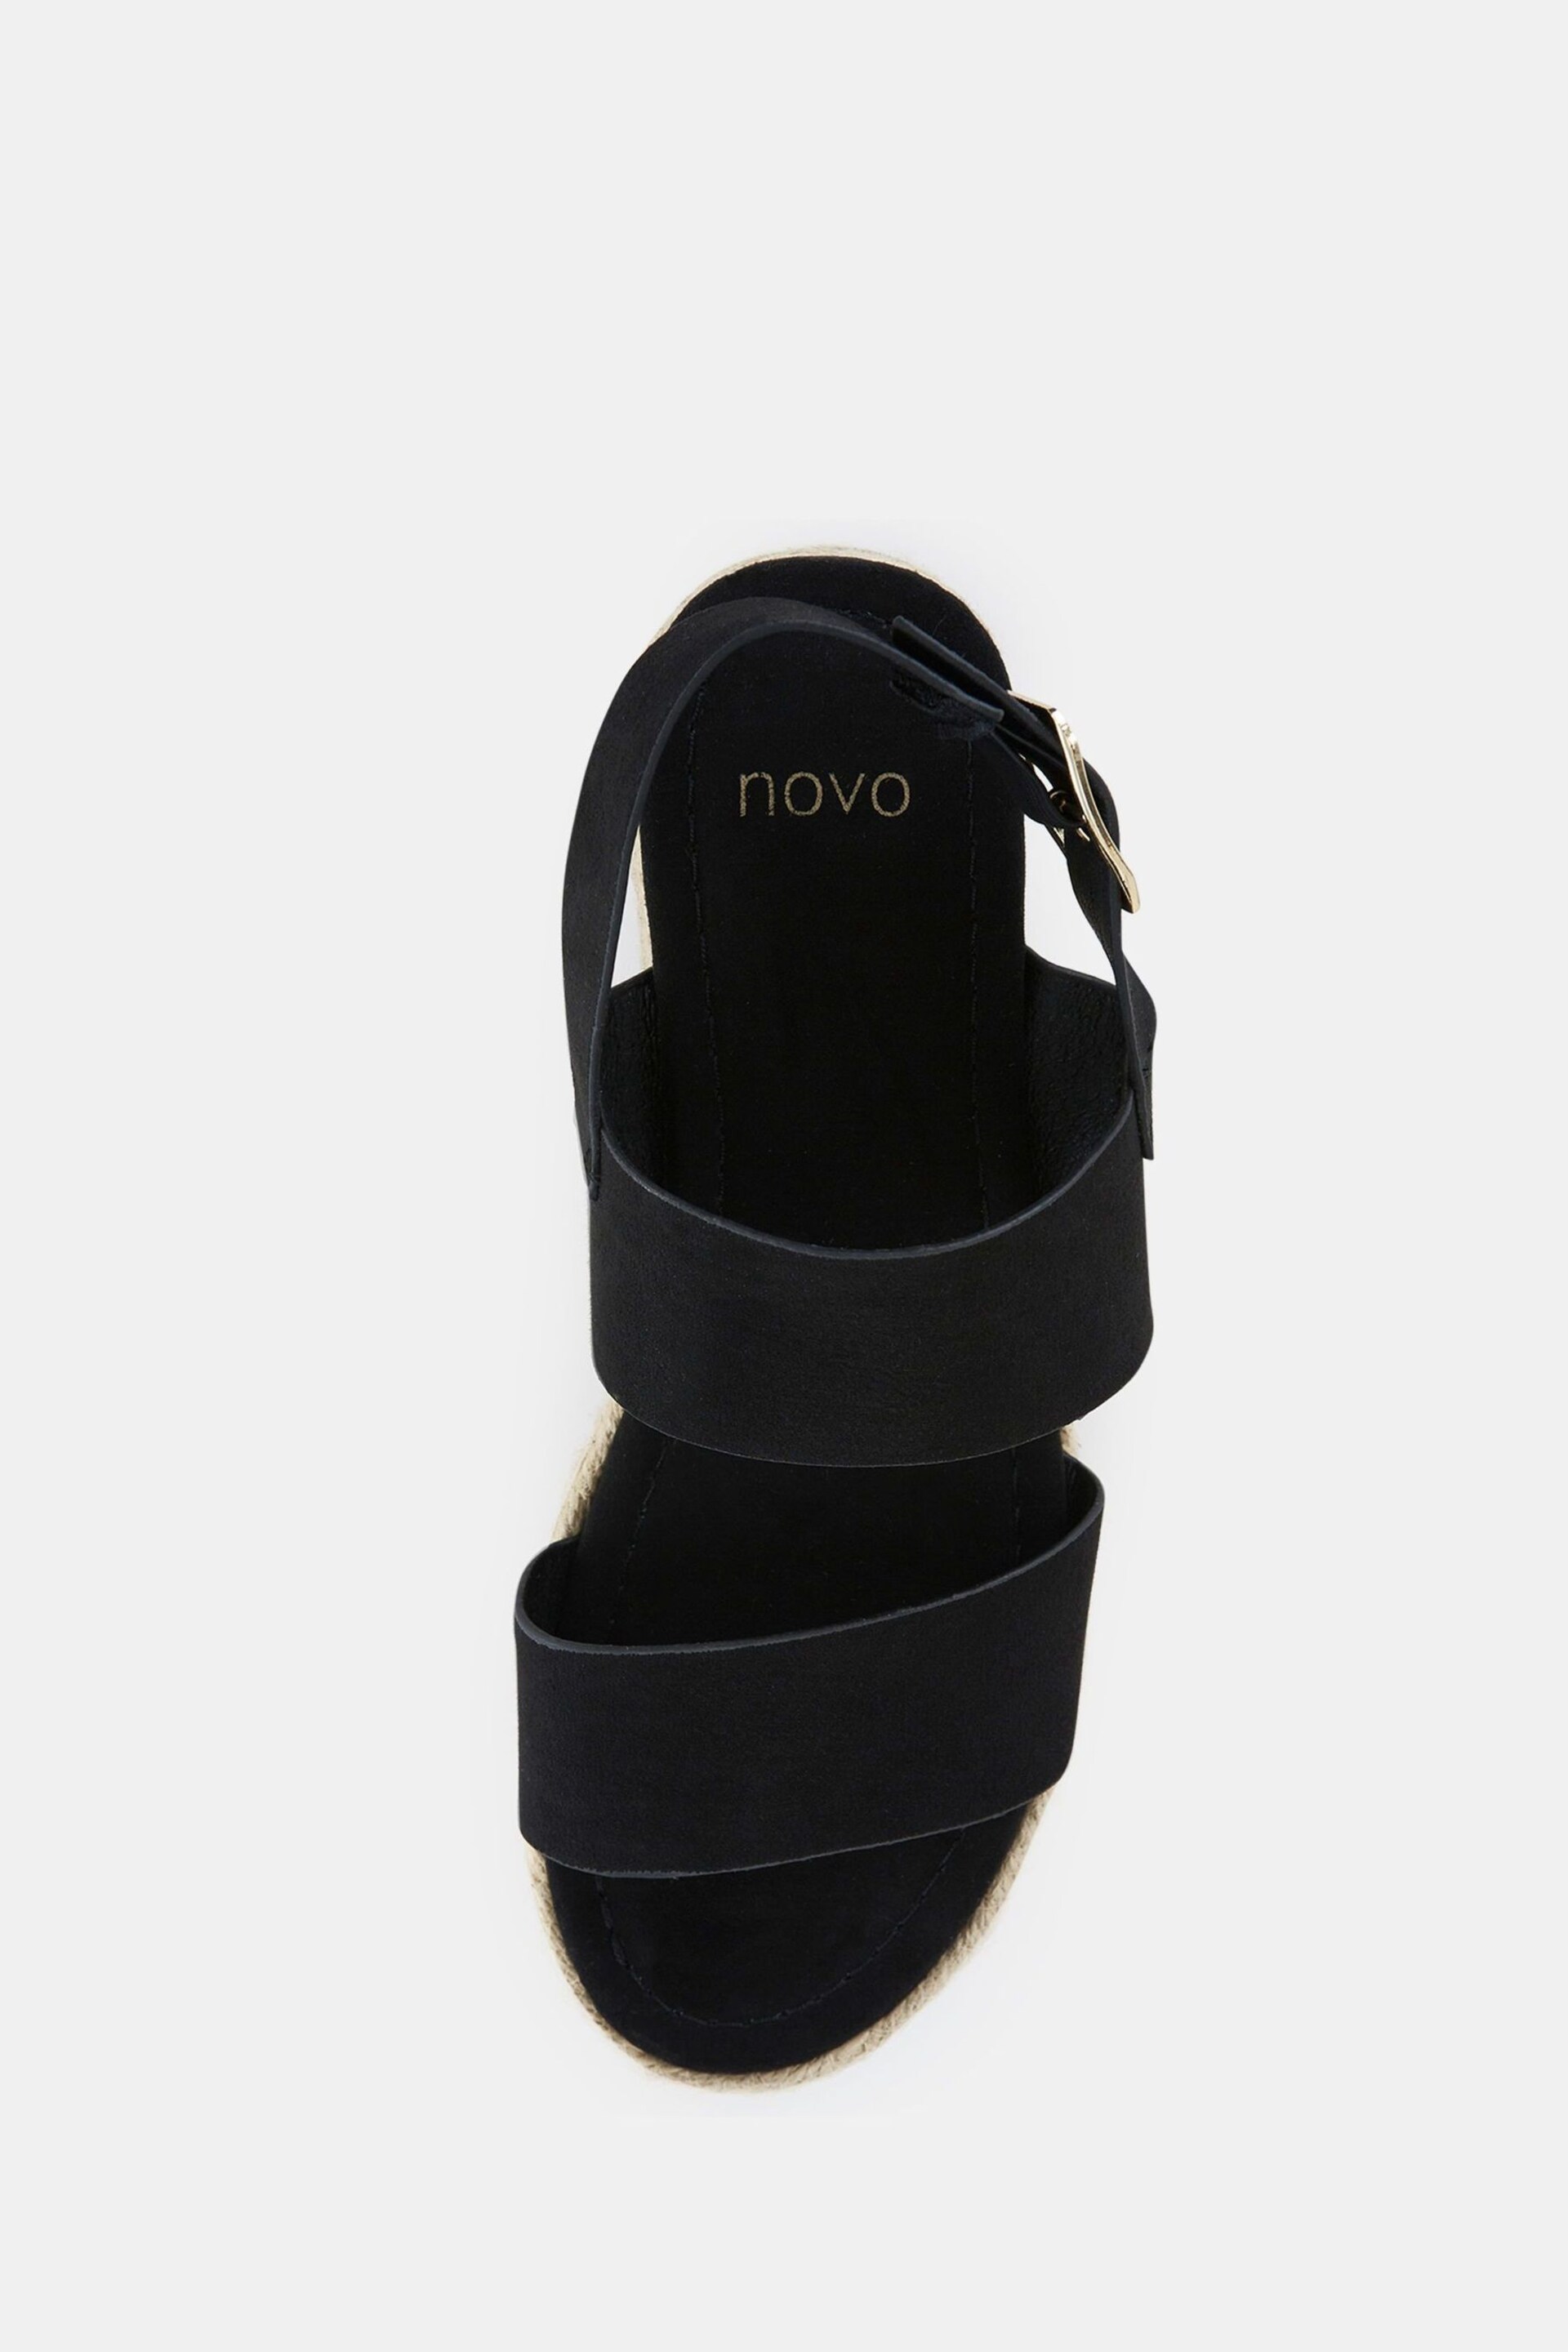 Novo Black Wide Fit Sadie Espadrille Double Strap Sandals - Image 5 of 5